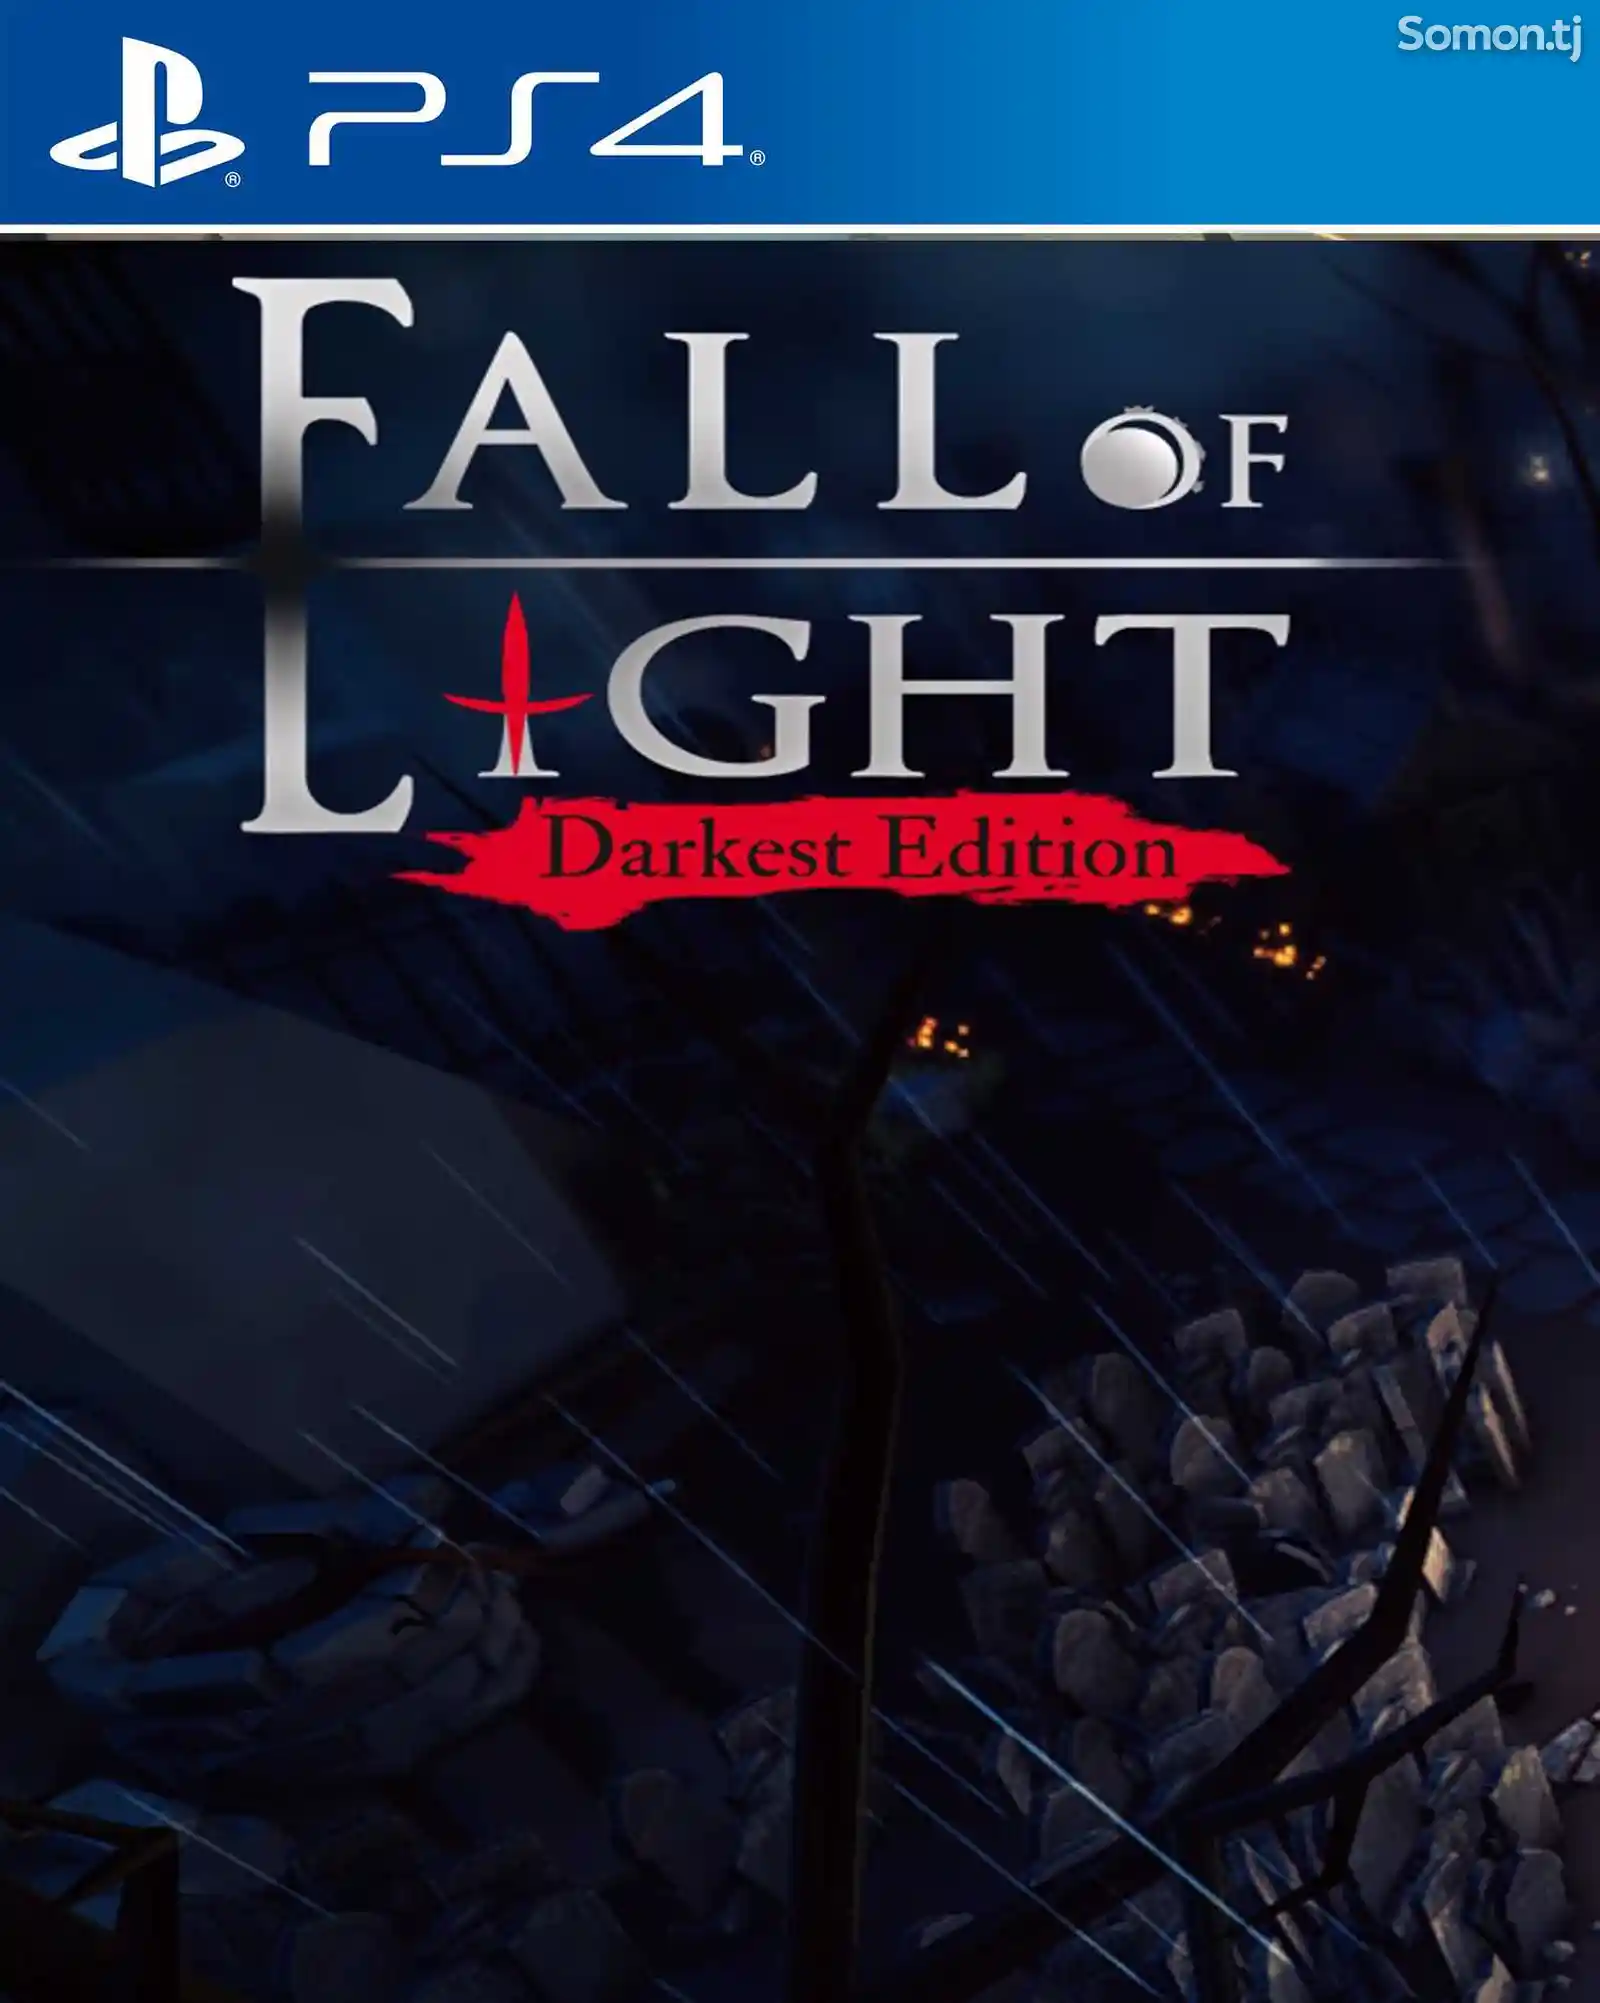 Игра Fall of light darkest edition для PS-4 / 5.05 / 6.72 / 7.02 / 7.55 / 9.00 /-1